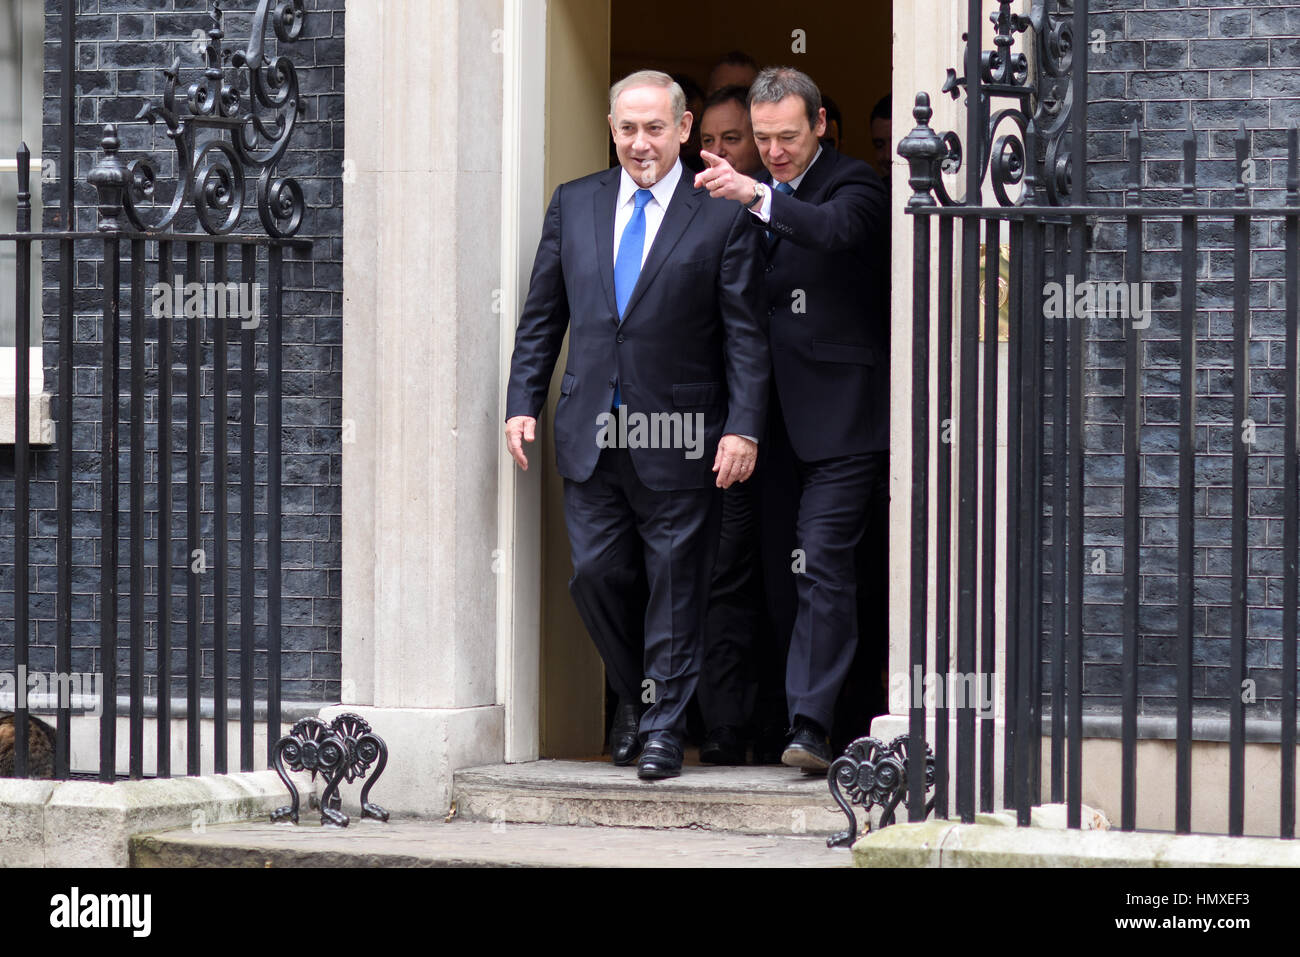 London, UK. 6. Februar 2017. Israels Ministerpräsident Netanyahu verlässt Downing Street zum Mittagessen. Netanjahu war in London für Gespräche mit Theresa May. Bildnachweis: Jacob Sacks-Jones/Alamy Live-Nachrichten. Stockfoto